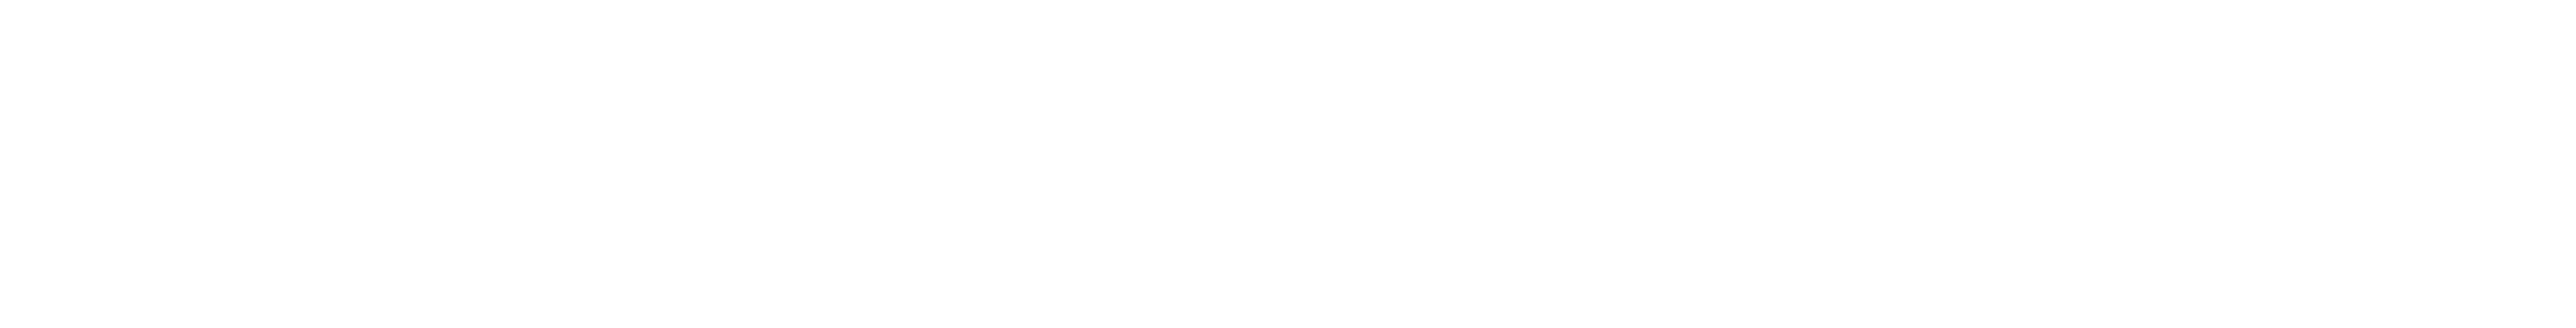 Empire_Technosys-footer-logo